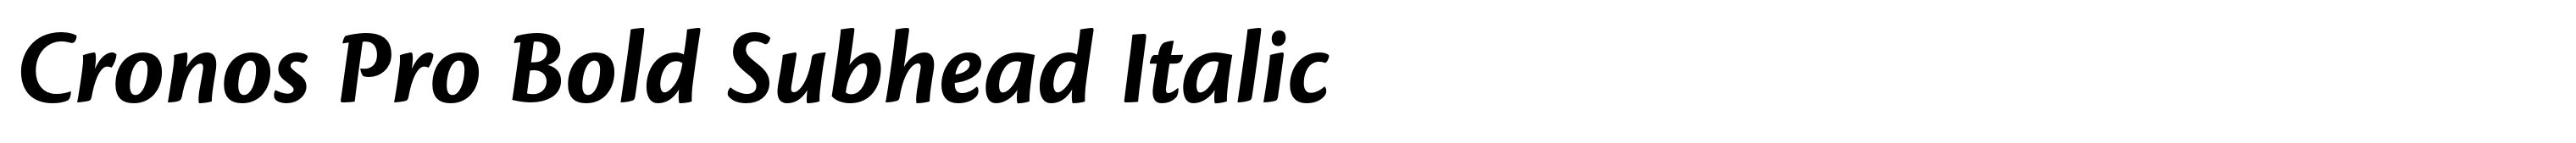 Cronos Pro Bold Subhead Italic